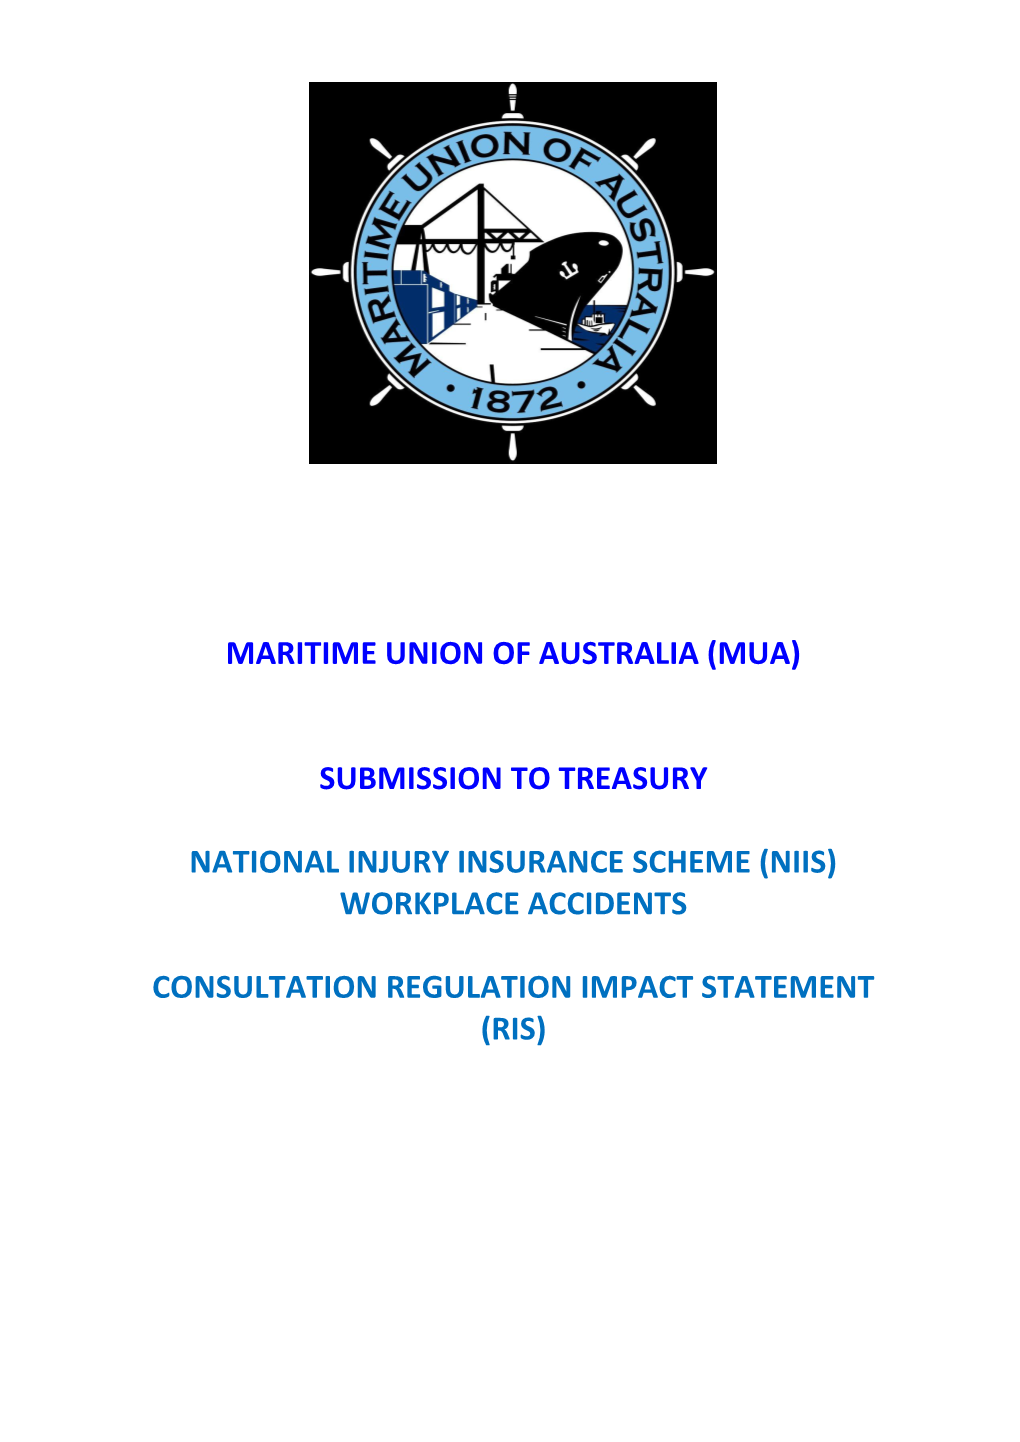 Maritime Union of Australia - National Injury Insurance Scheme Workplace Accidents